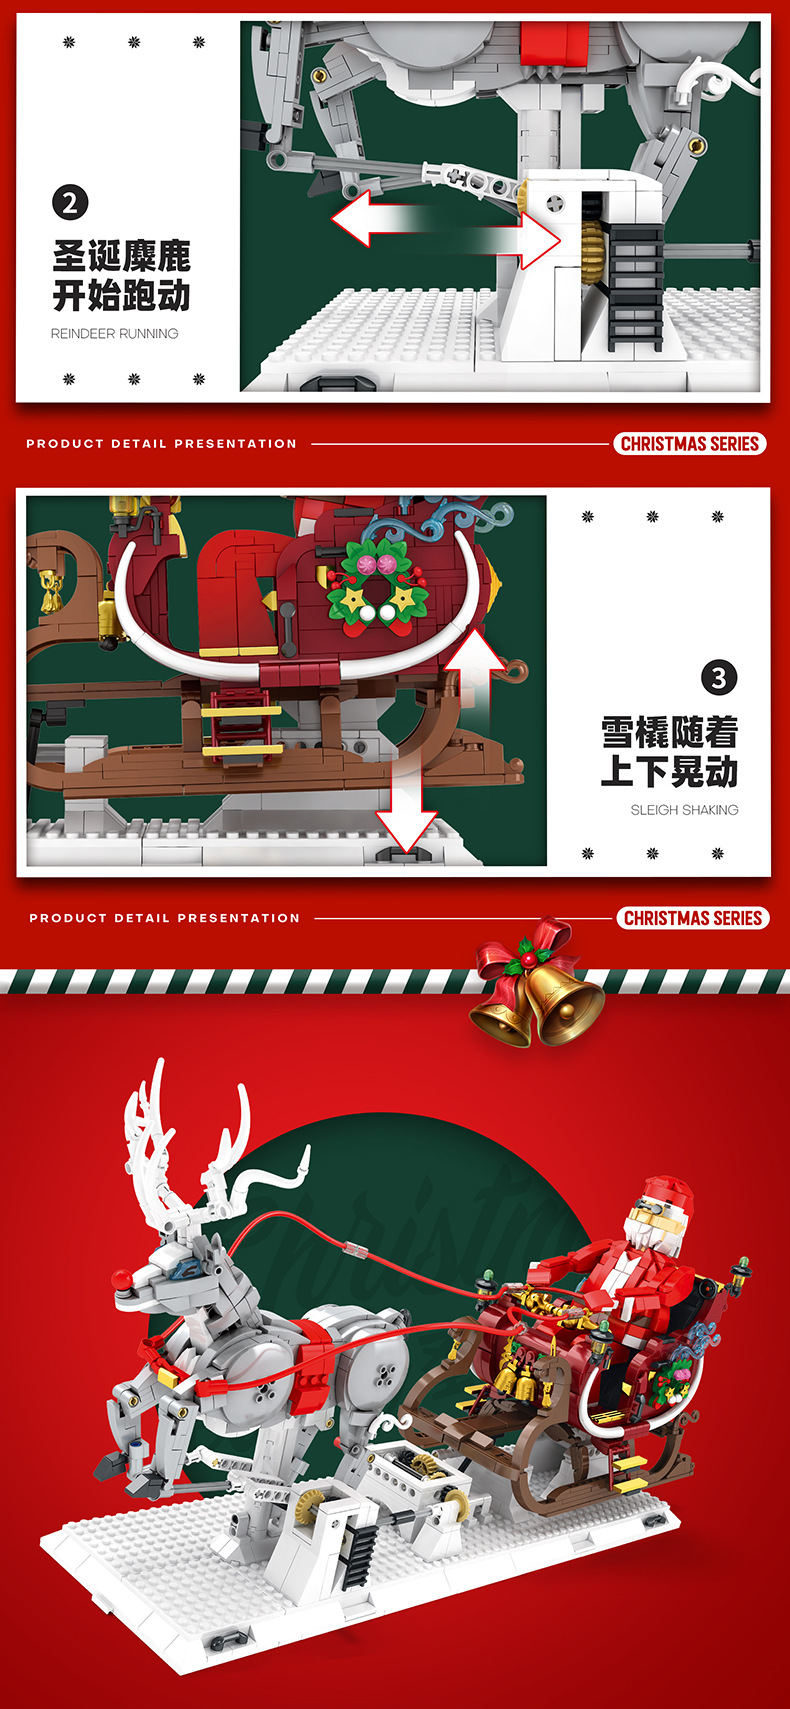 Reobrix 66002 Merry Christmas Series Christmas Sleigh Block Toy Set